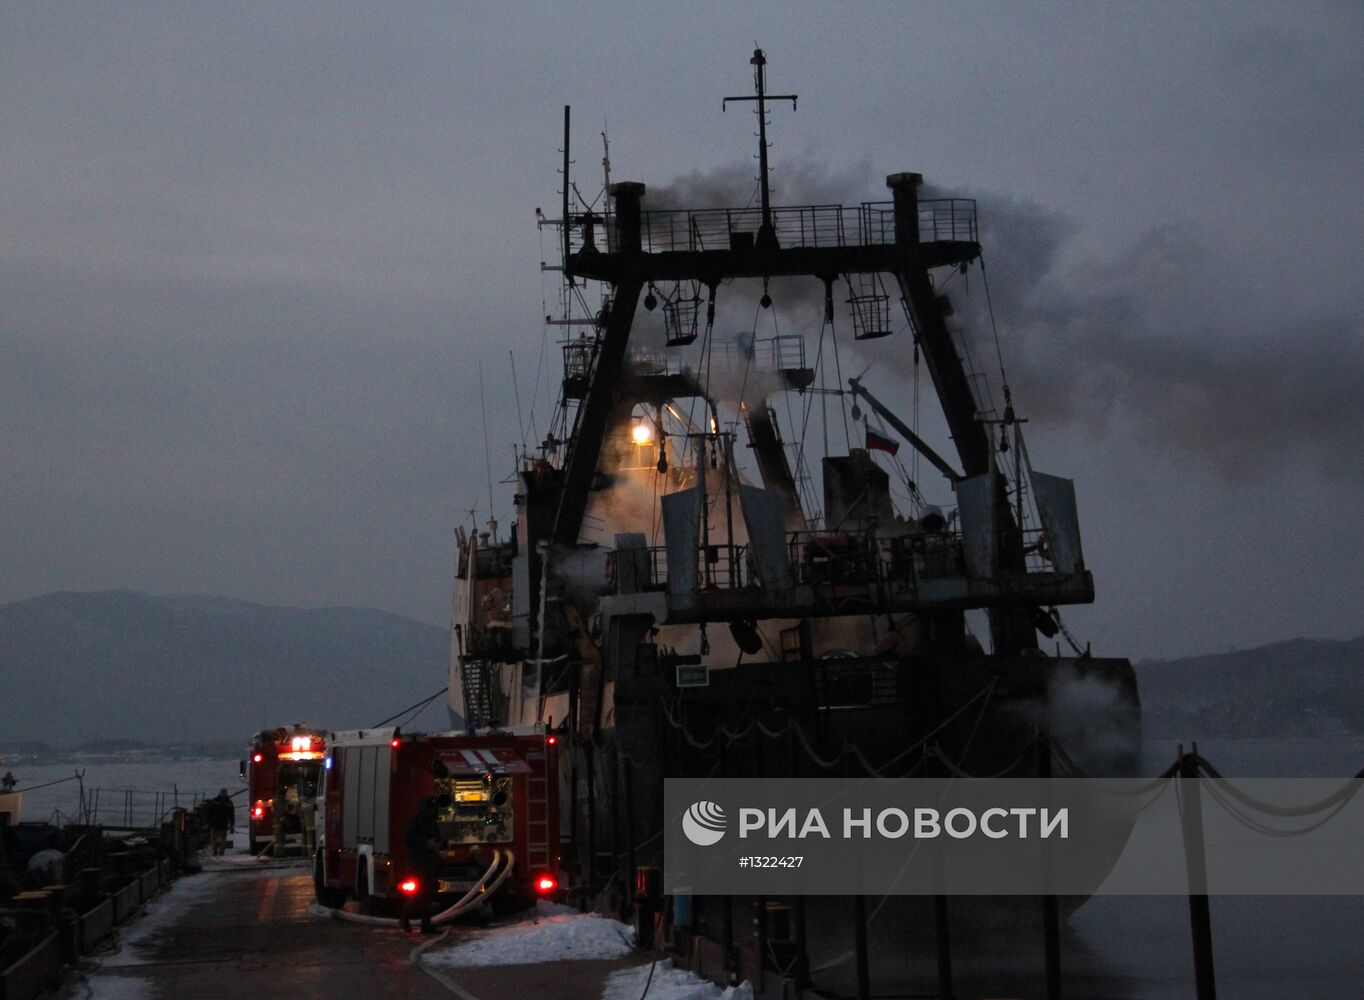 Пожар на траулере "Охотник" во Владивостоке